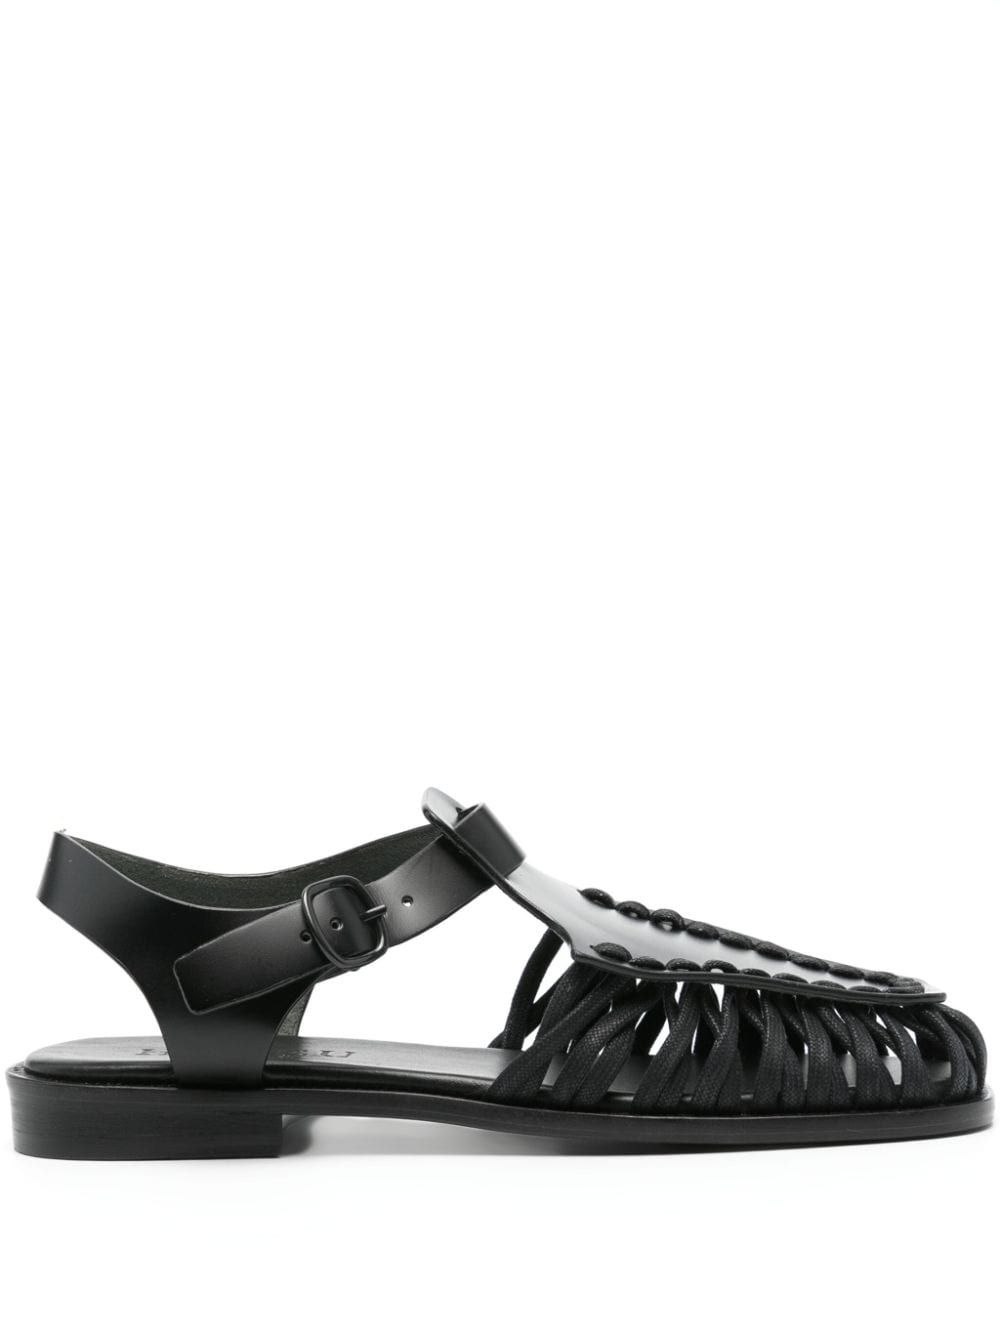 Alaro leather sandals - 1